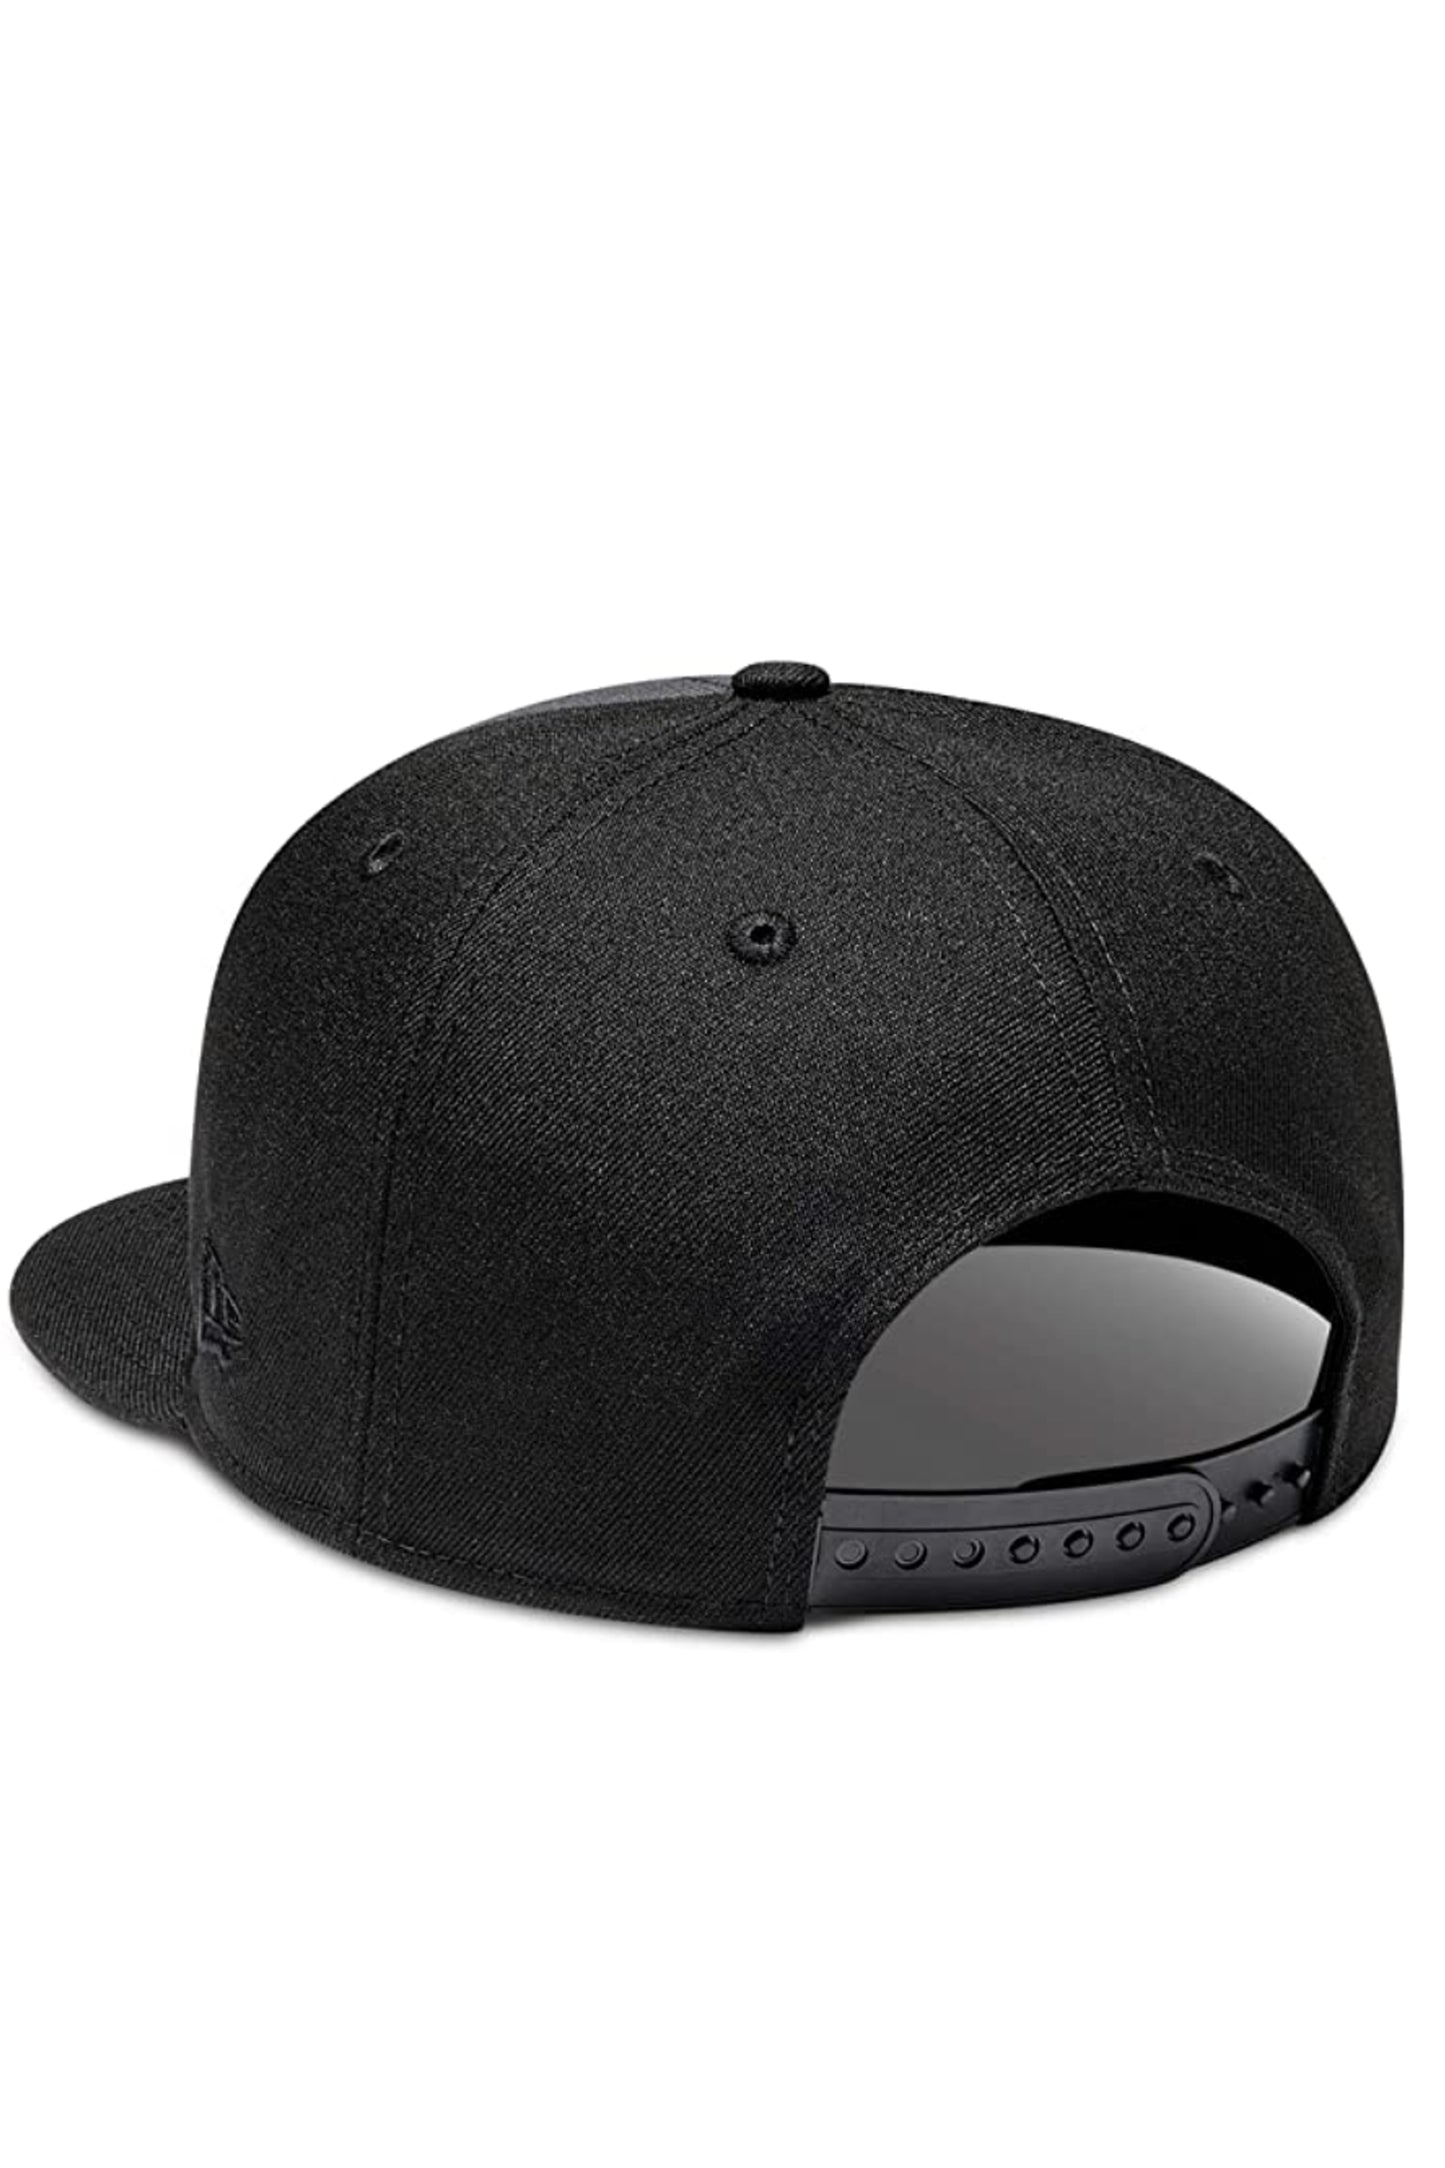 ImportWorx Black Cruise Automotive 9FIFTY Embroidered Snapback Hat